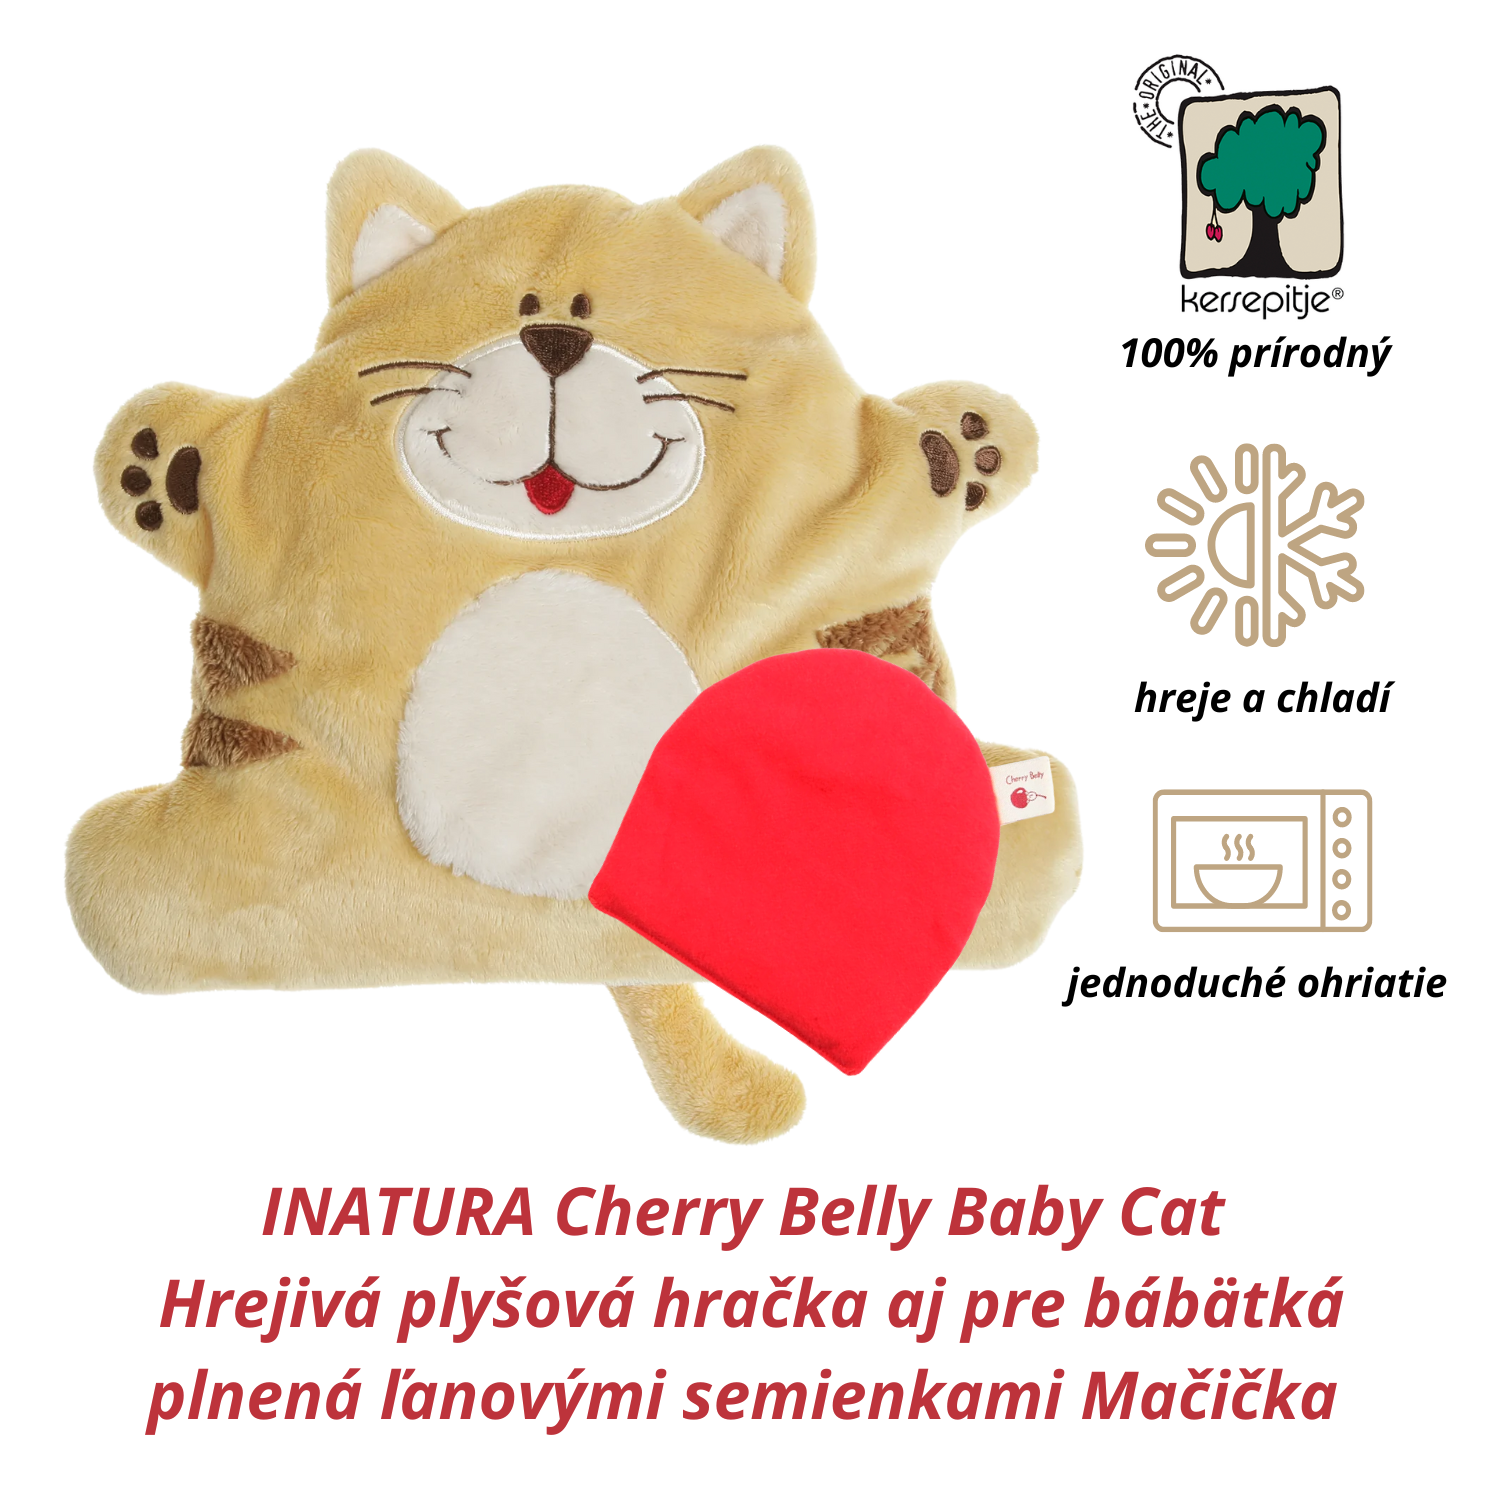 INATURA Cherry Belly Baby Cat